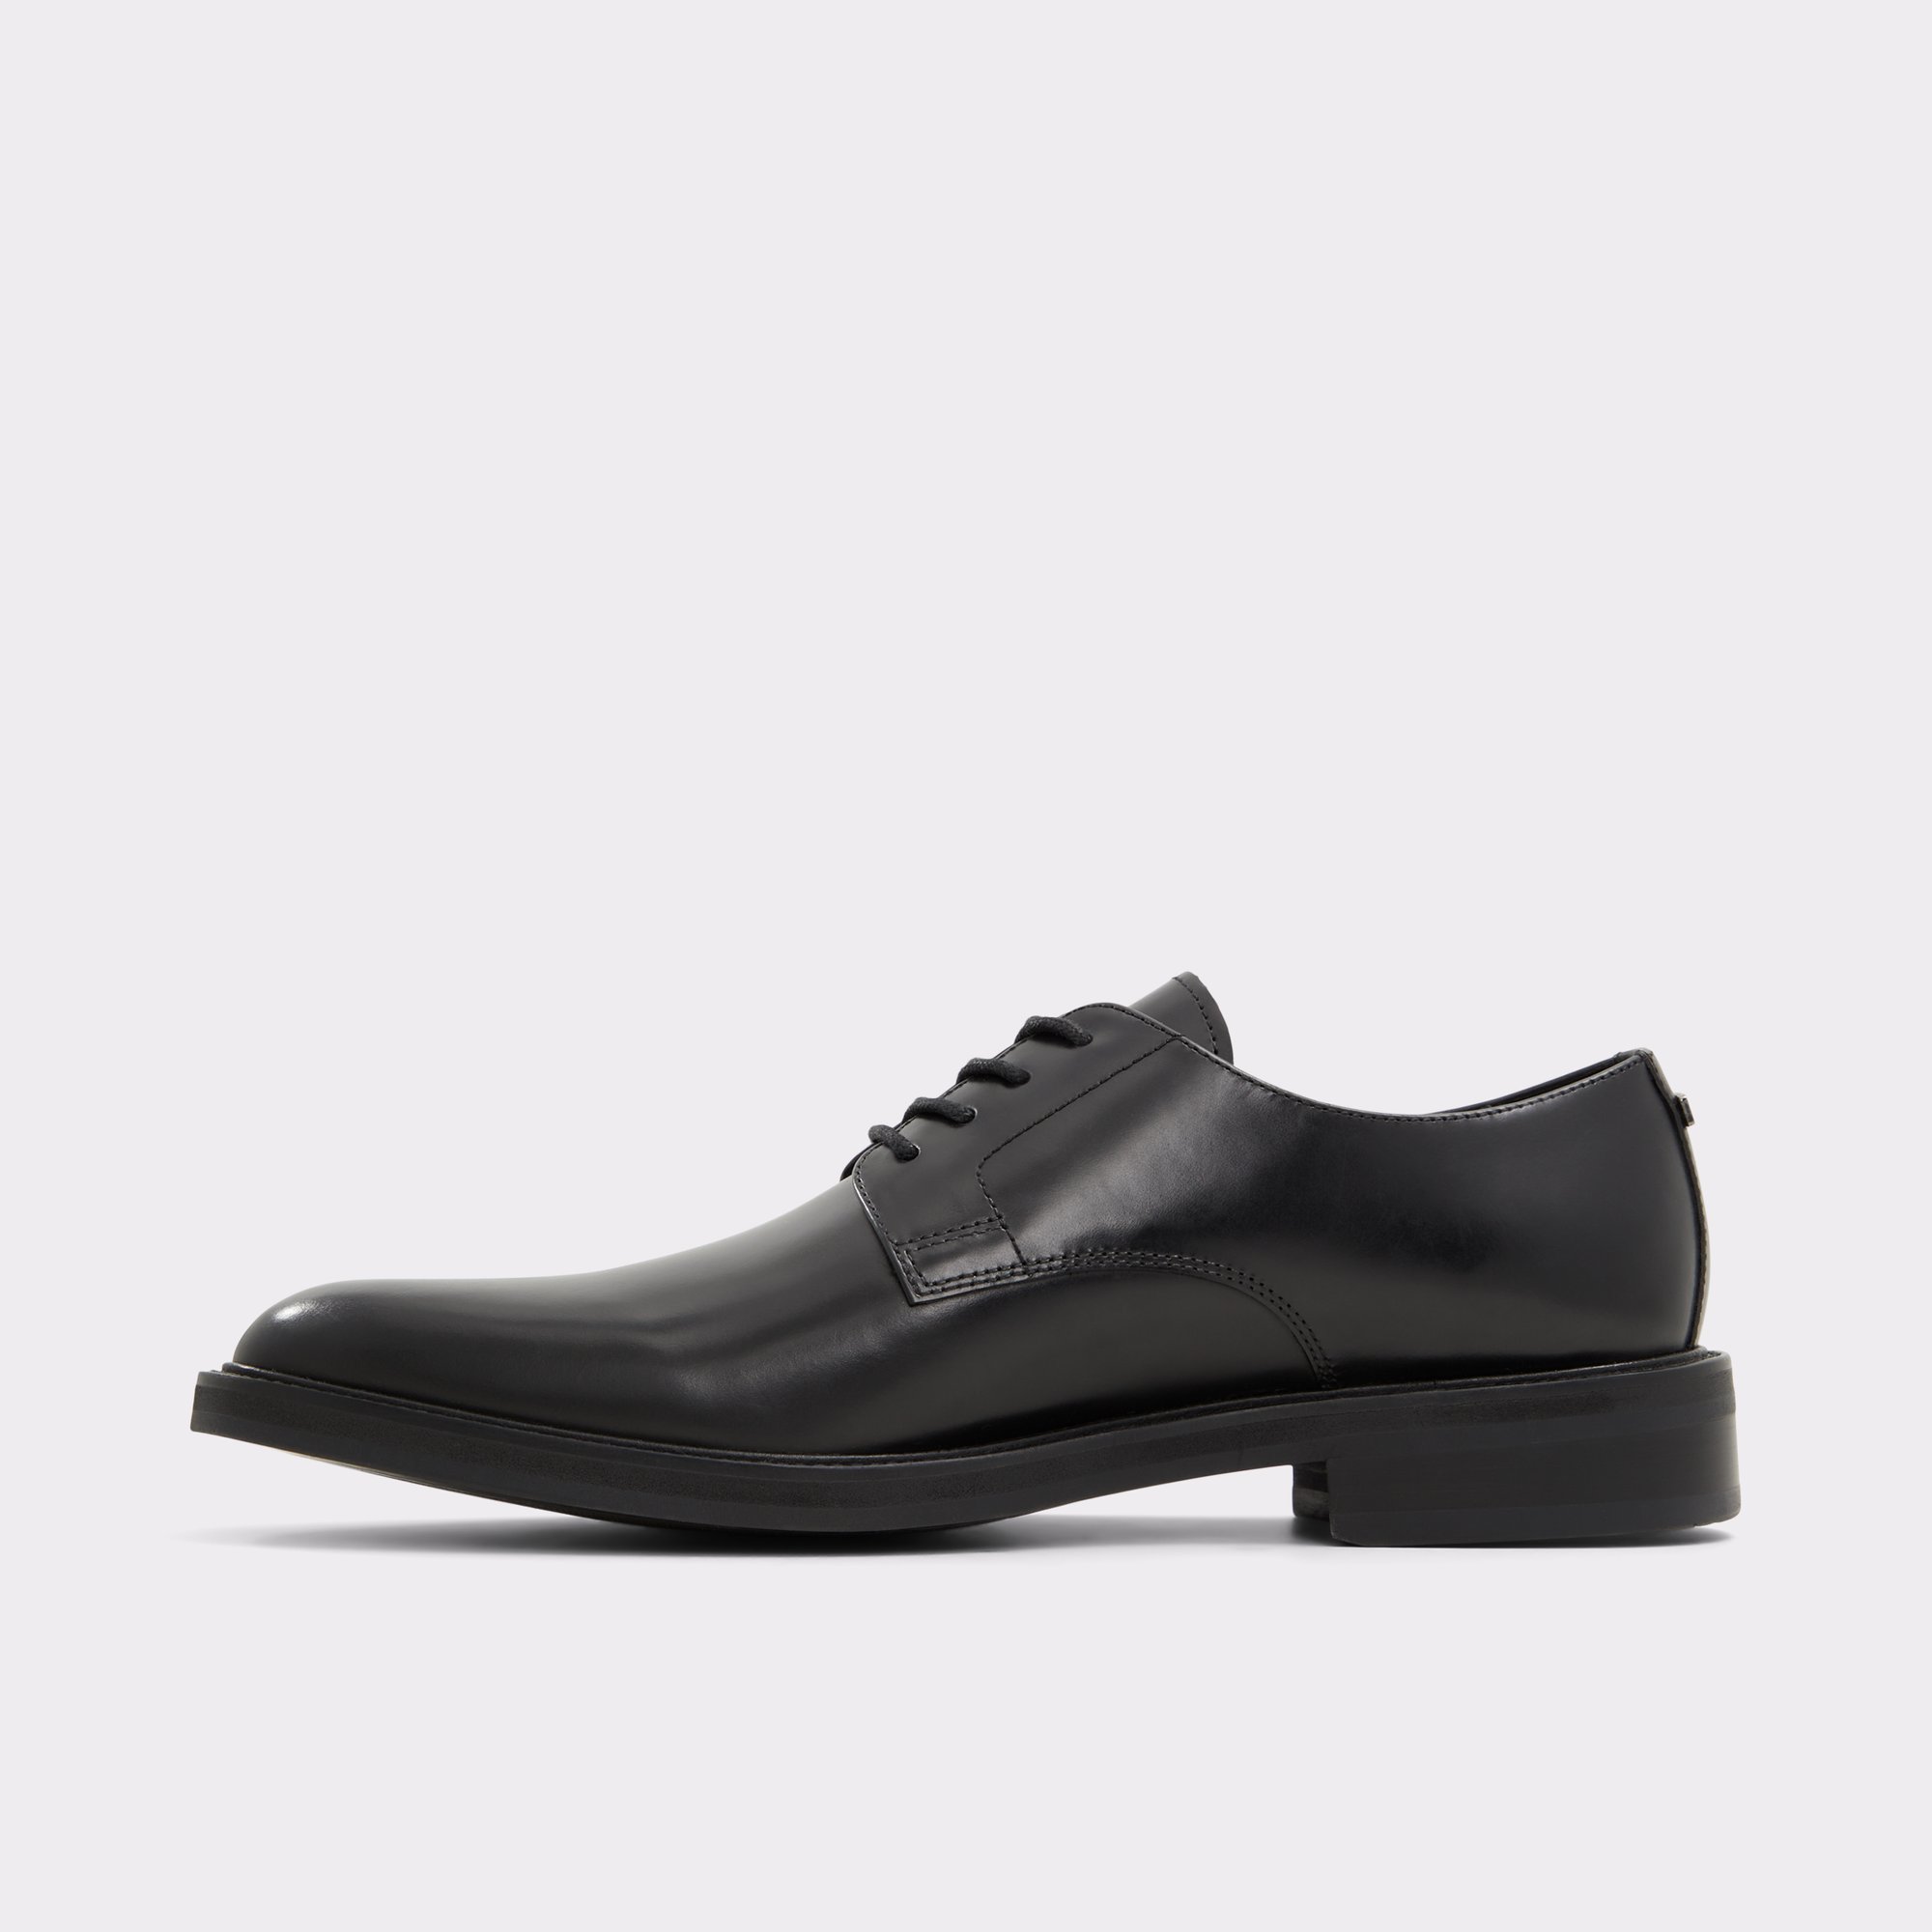 Libertine Black Men's Dress Shoes | ALDO Canada